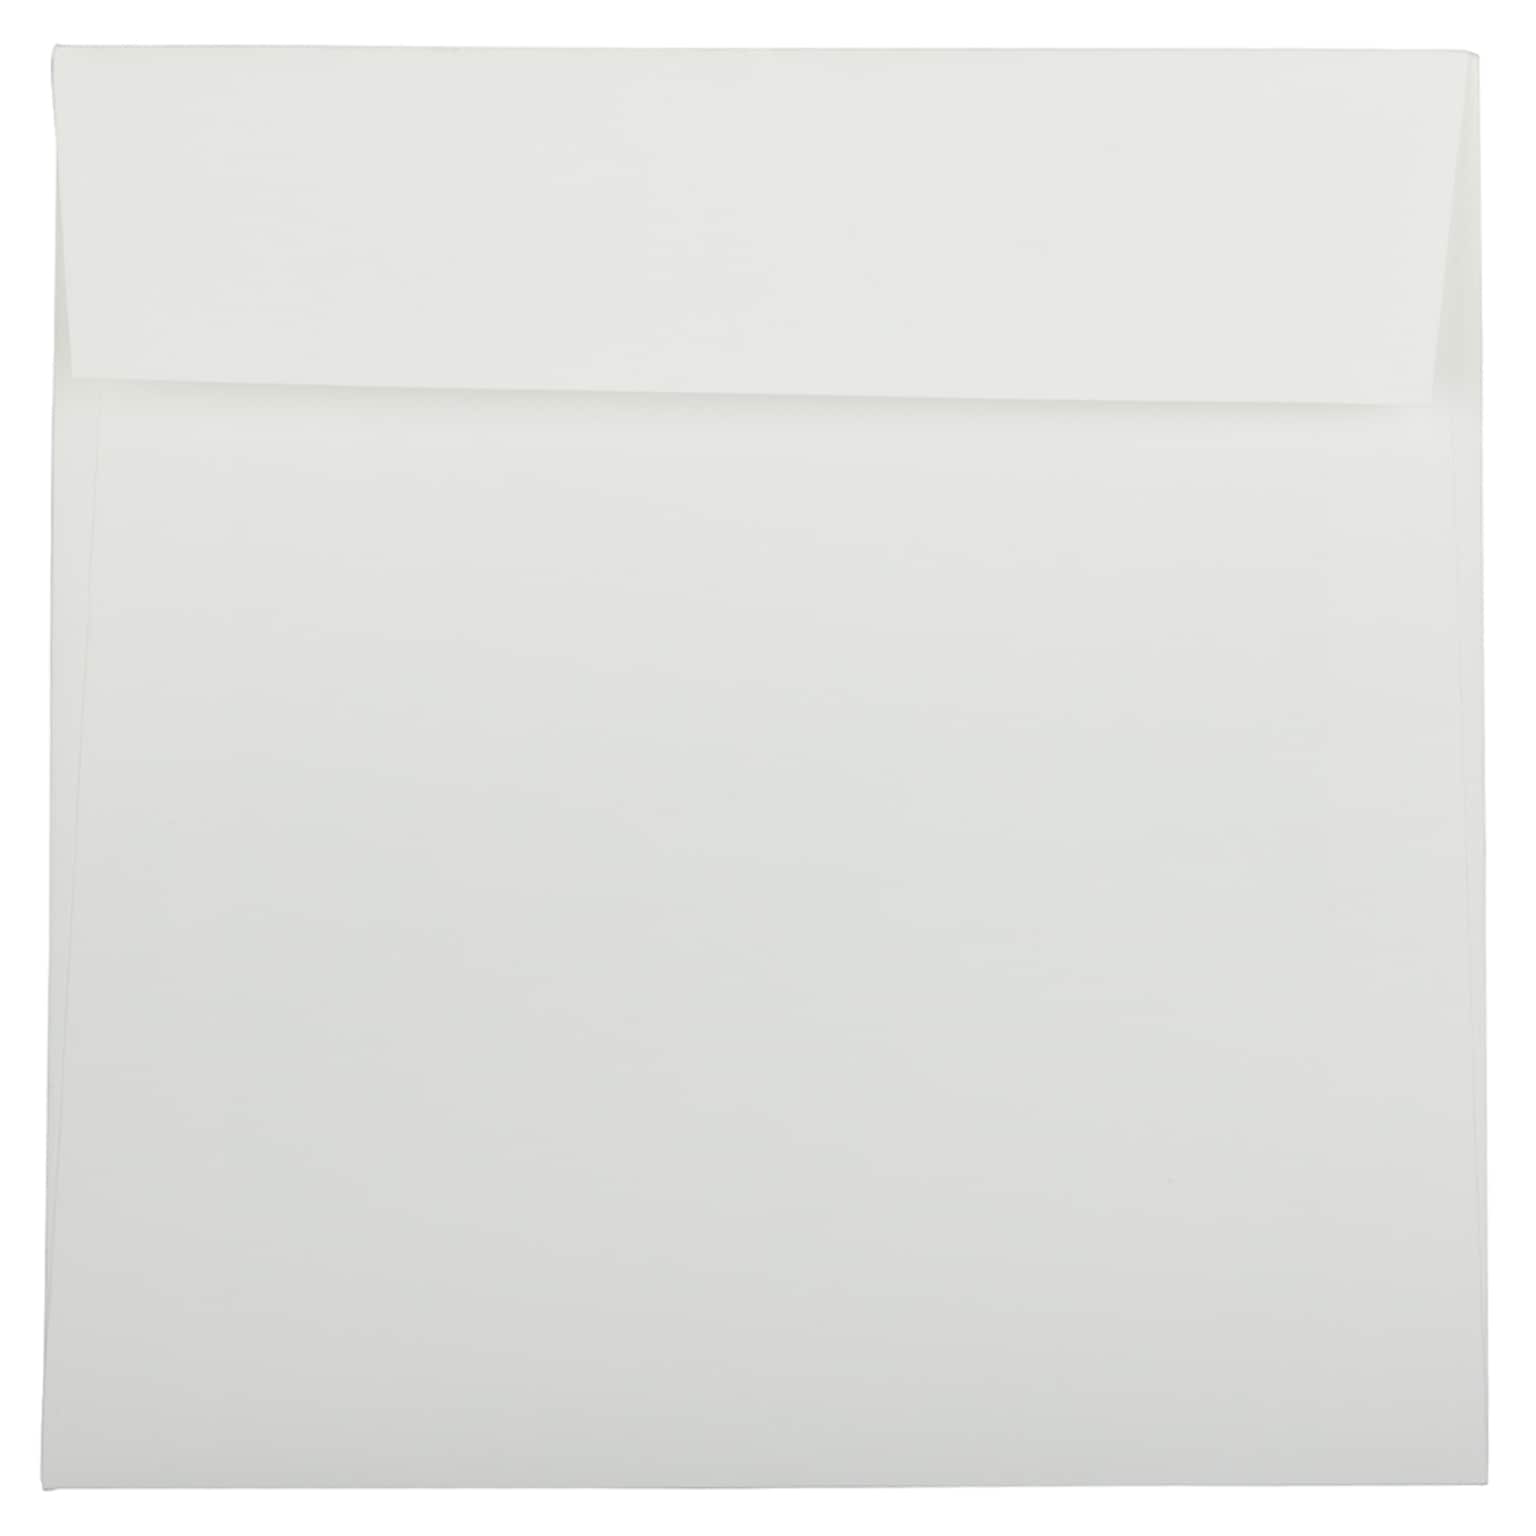 JAM Paper 8.5 x 8.5 Square Strathmore Invitation Envelopes, Bright White Wove, 25/Pack (900858534)